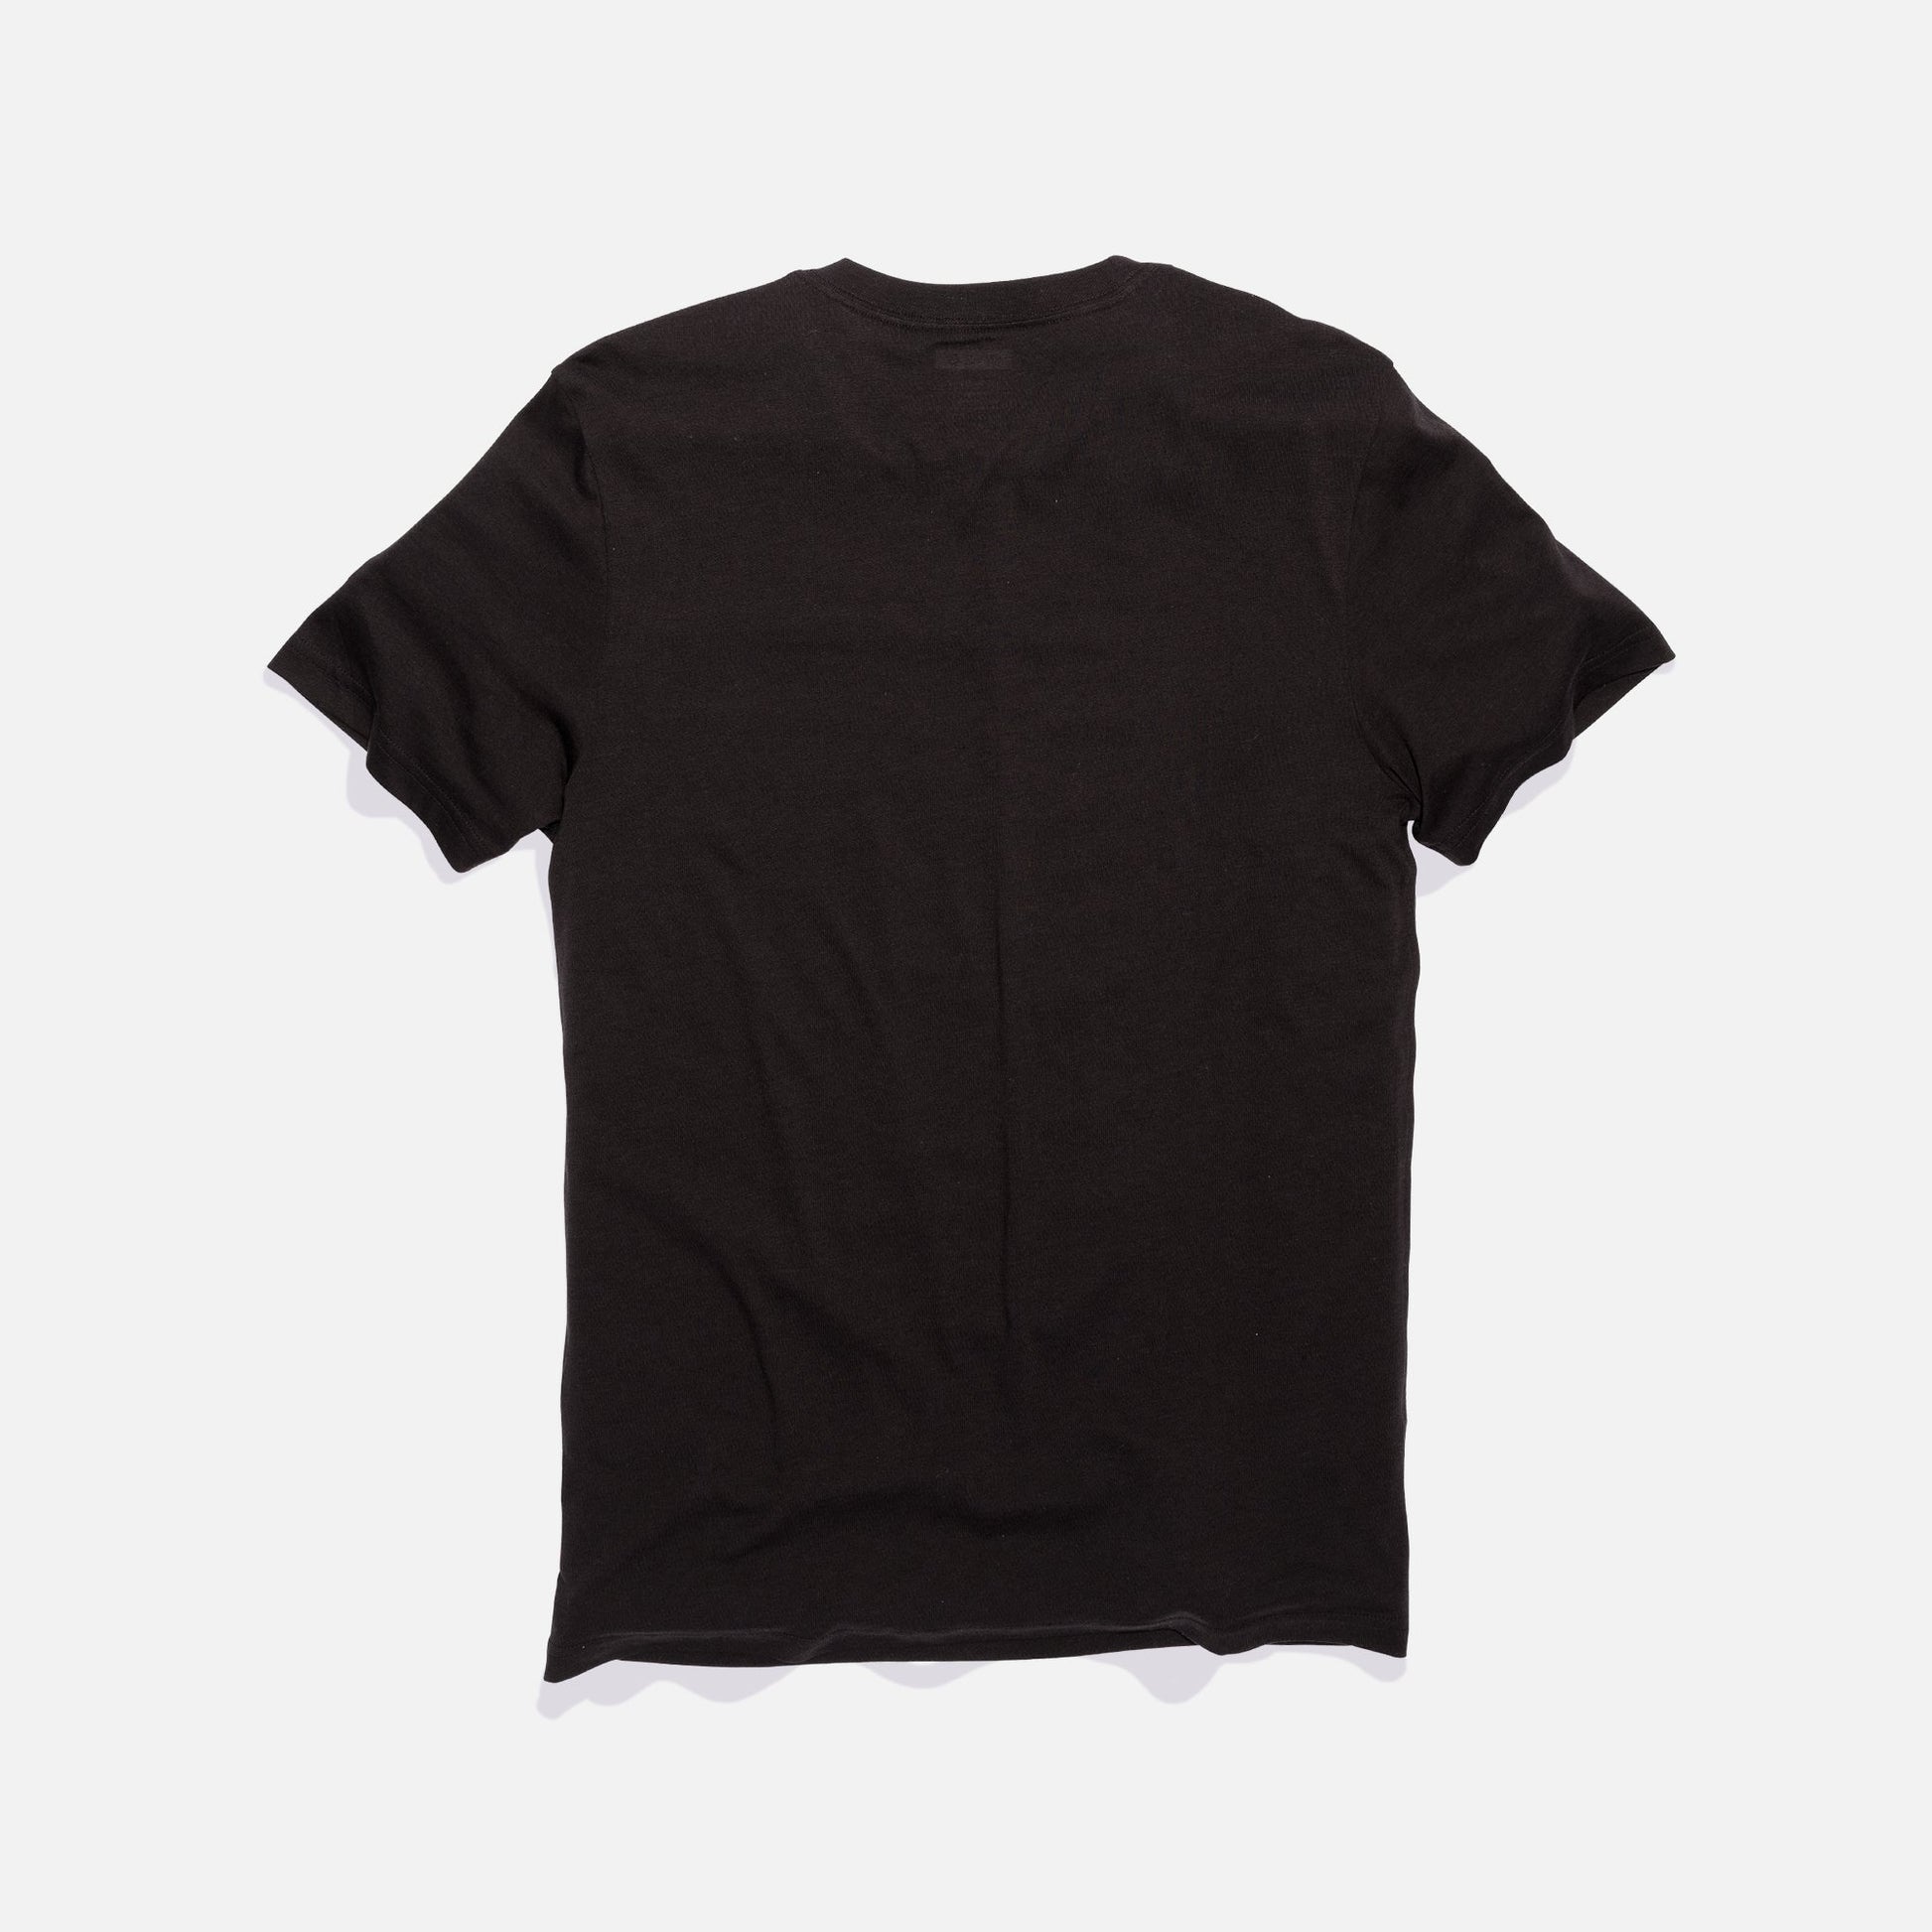 T-shirt à poche noir Standard de Stance